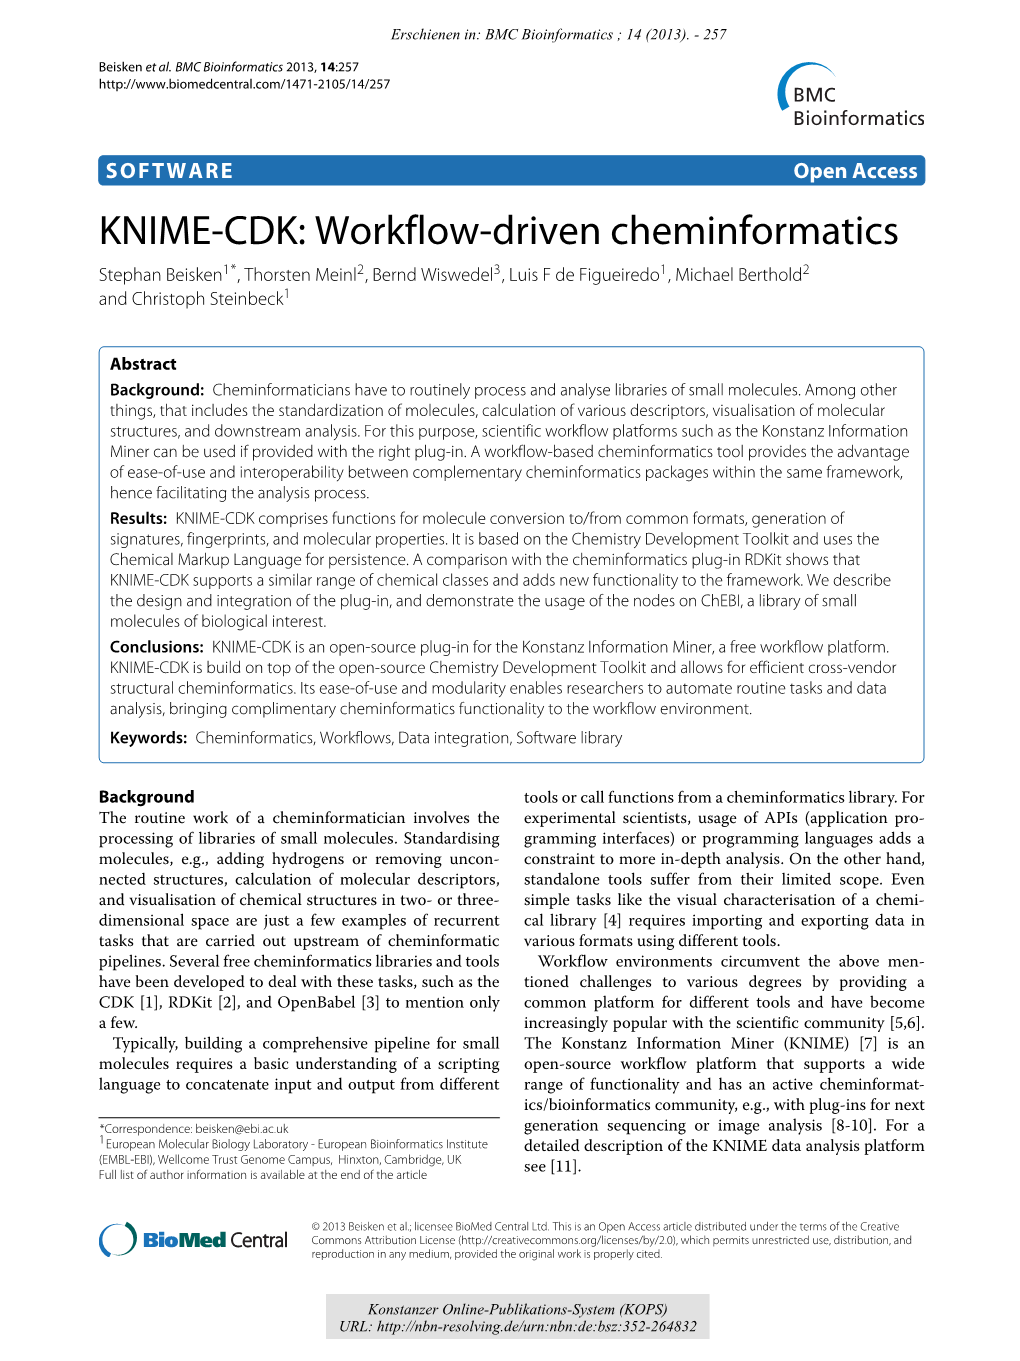 KNIME-CDK : Workflow-Driven Cheminformatics